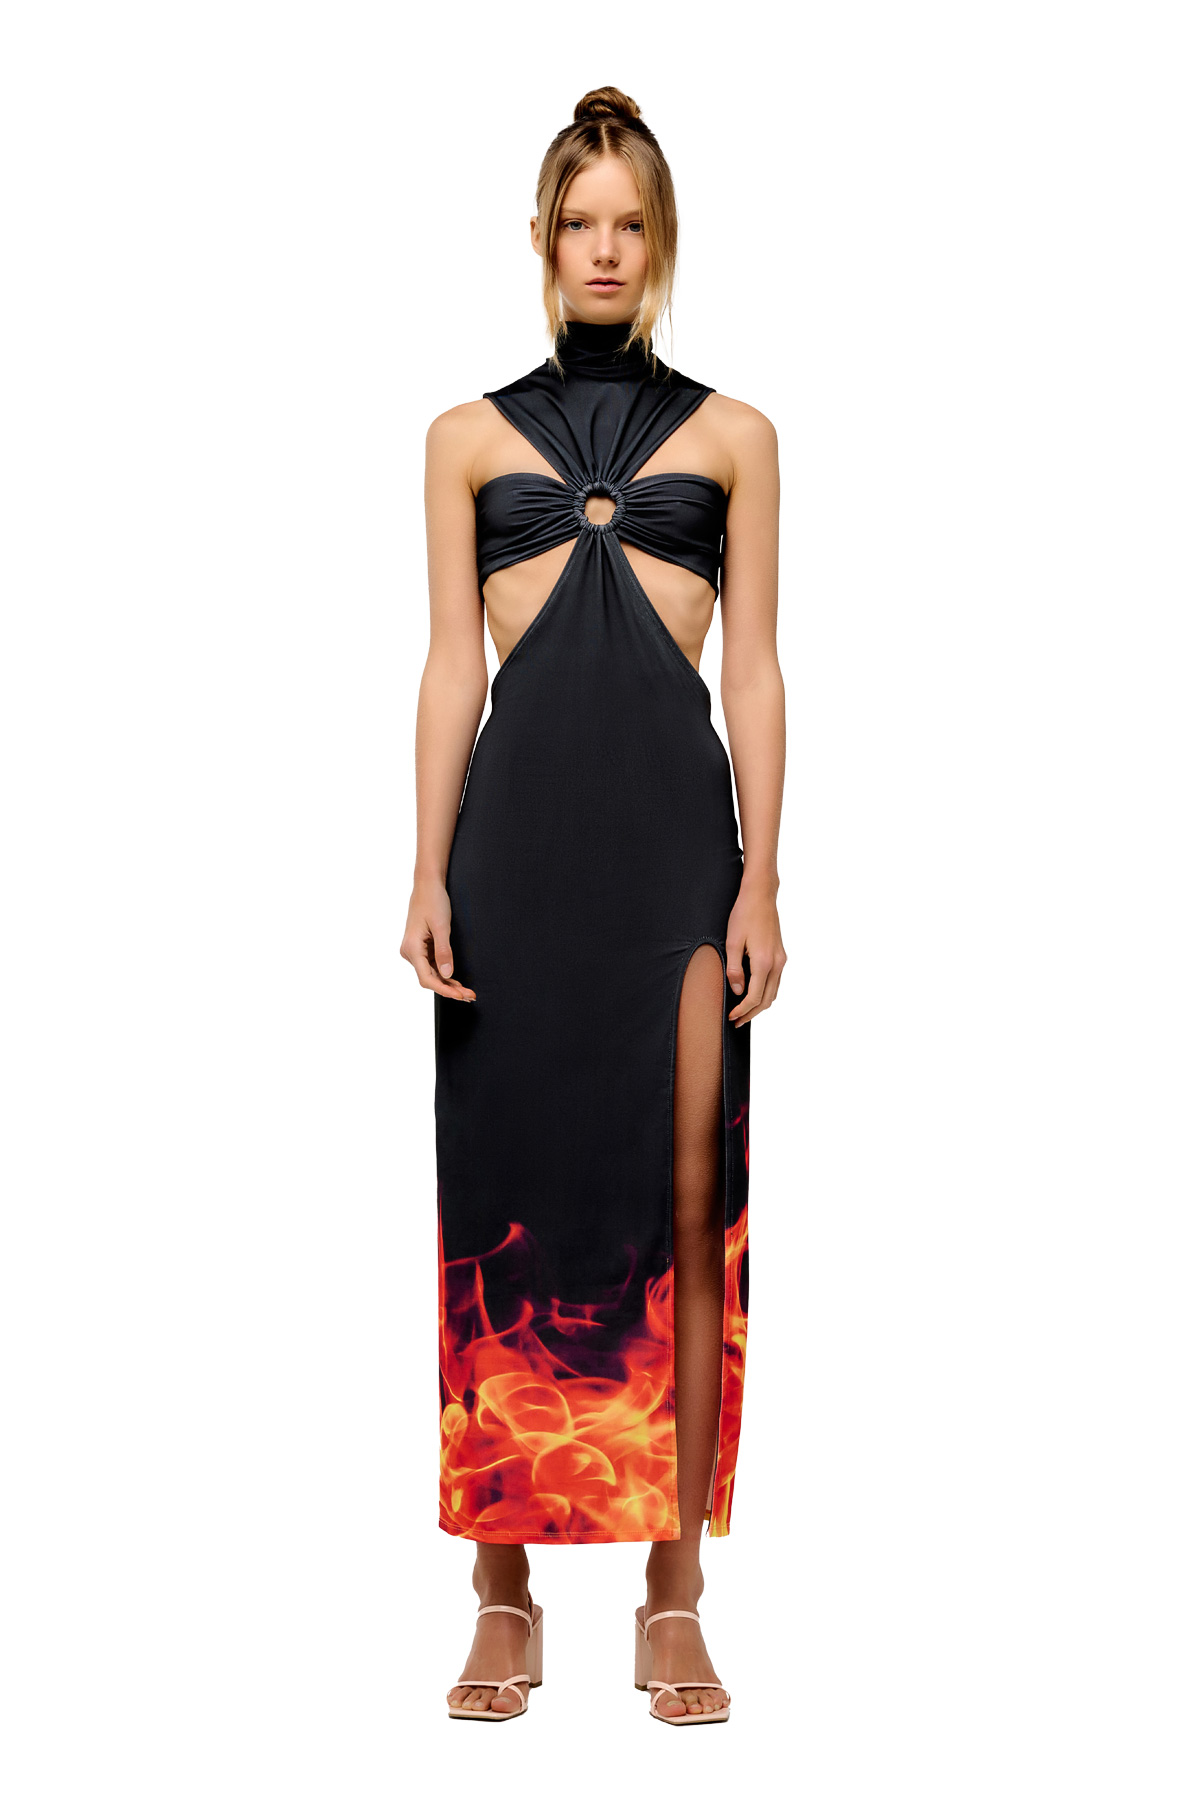 Berhasm Dress with fire print